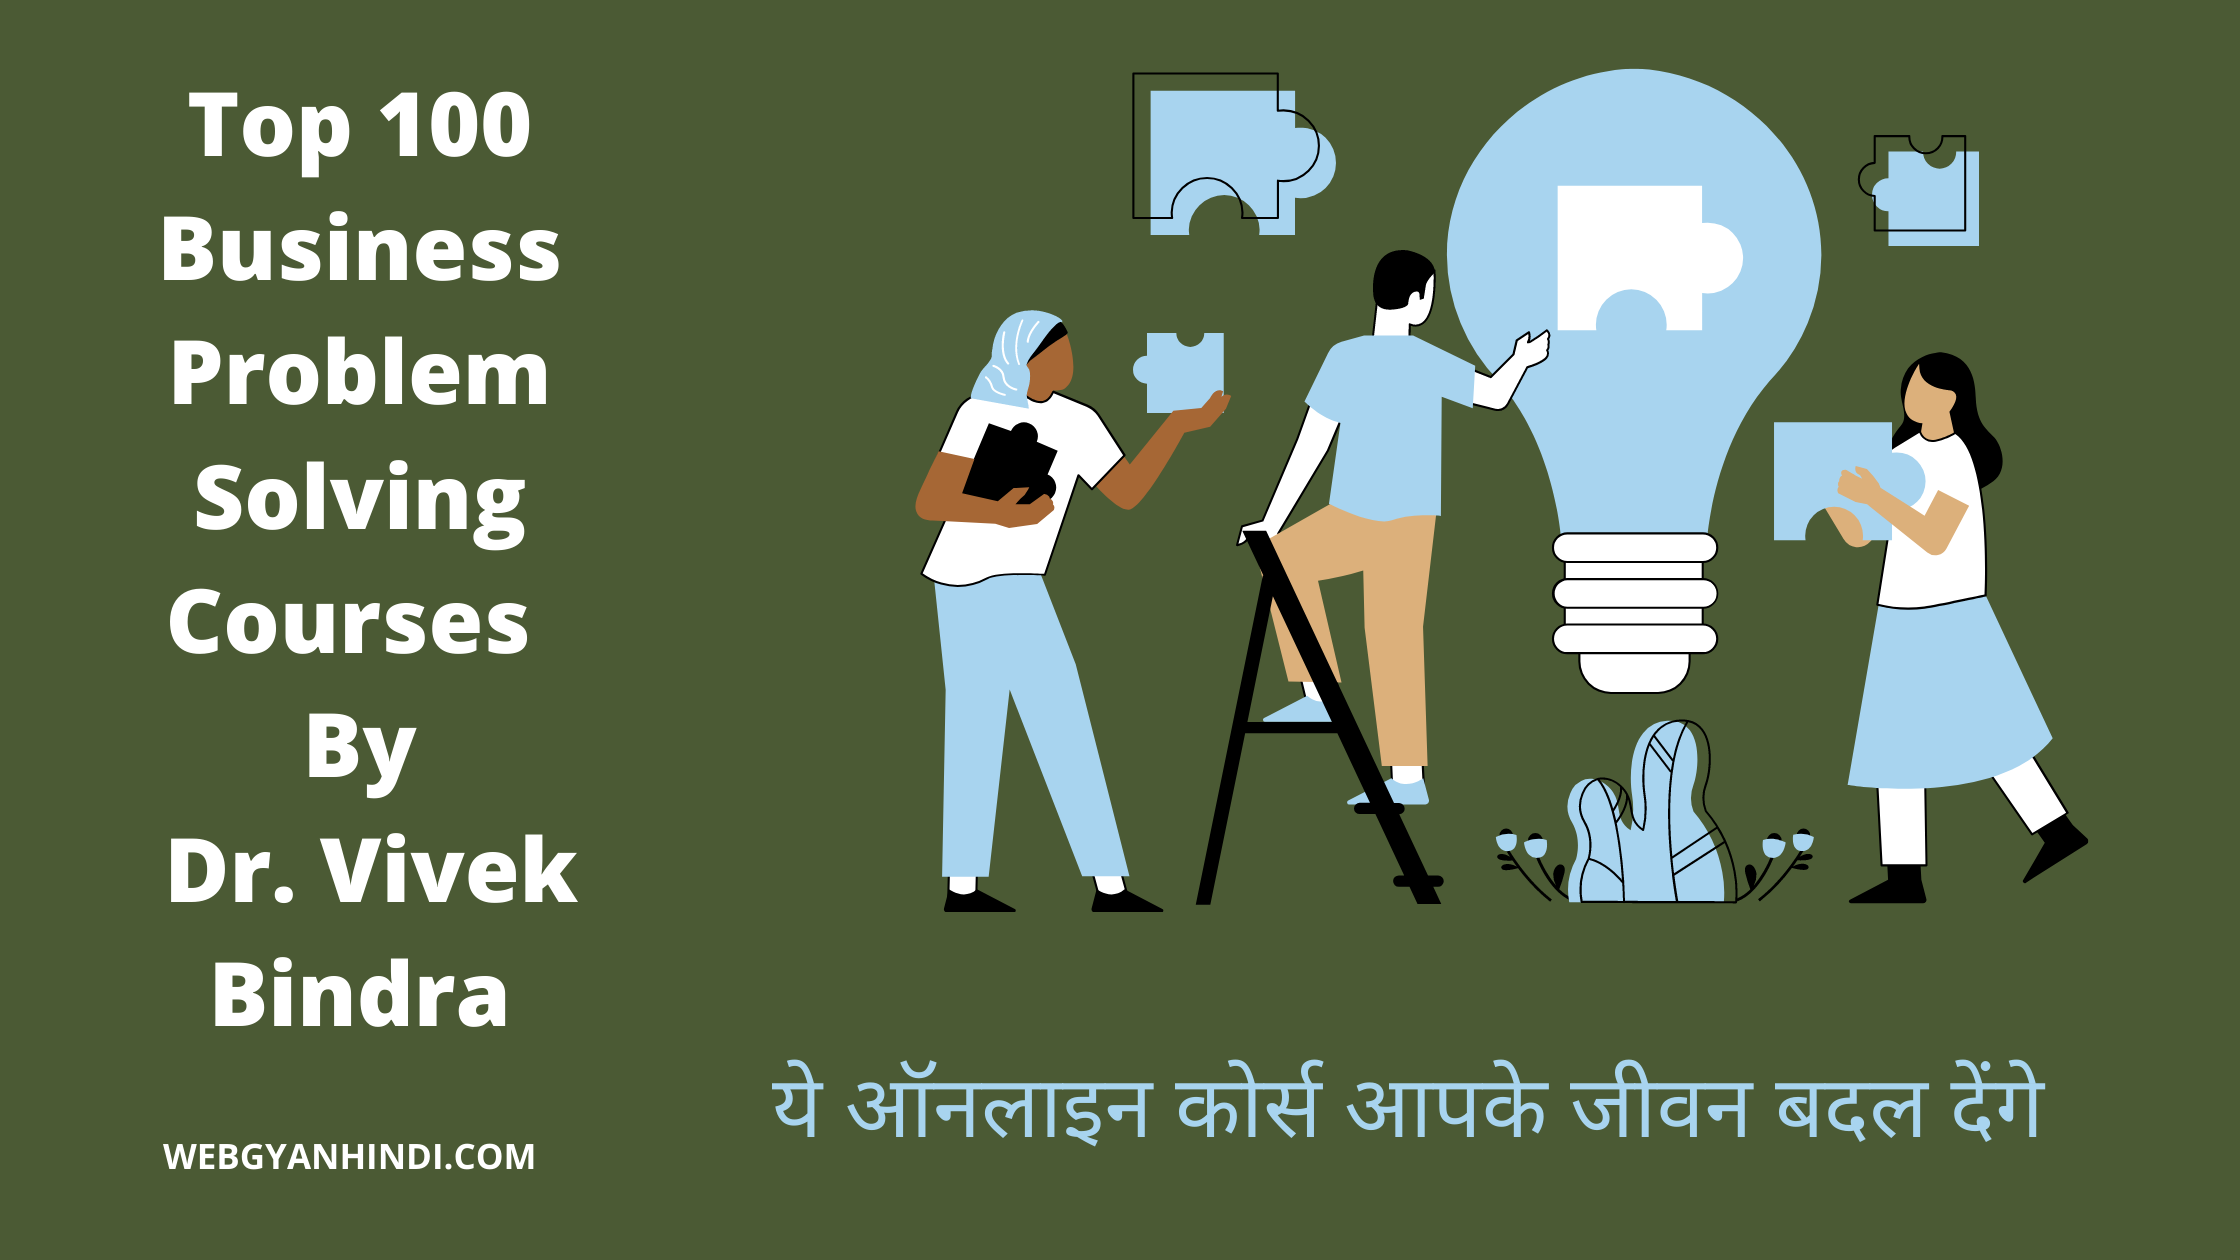 Top 100 Business Problem Solving Courses | Dr. Vivek Bindra